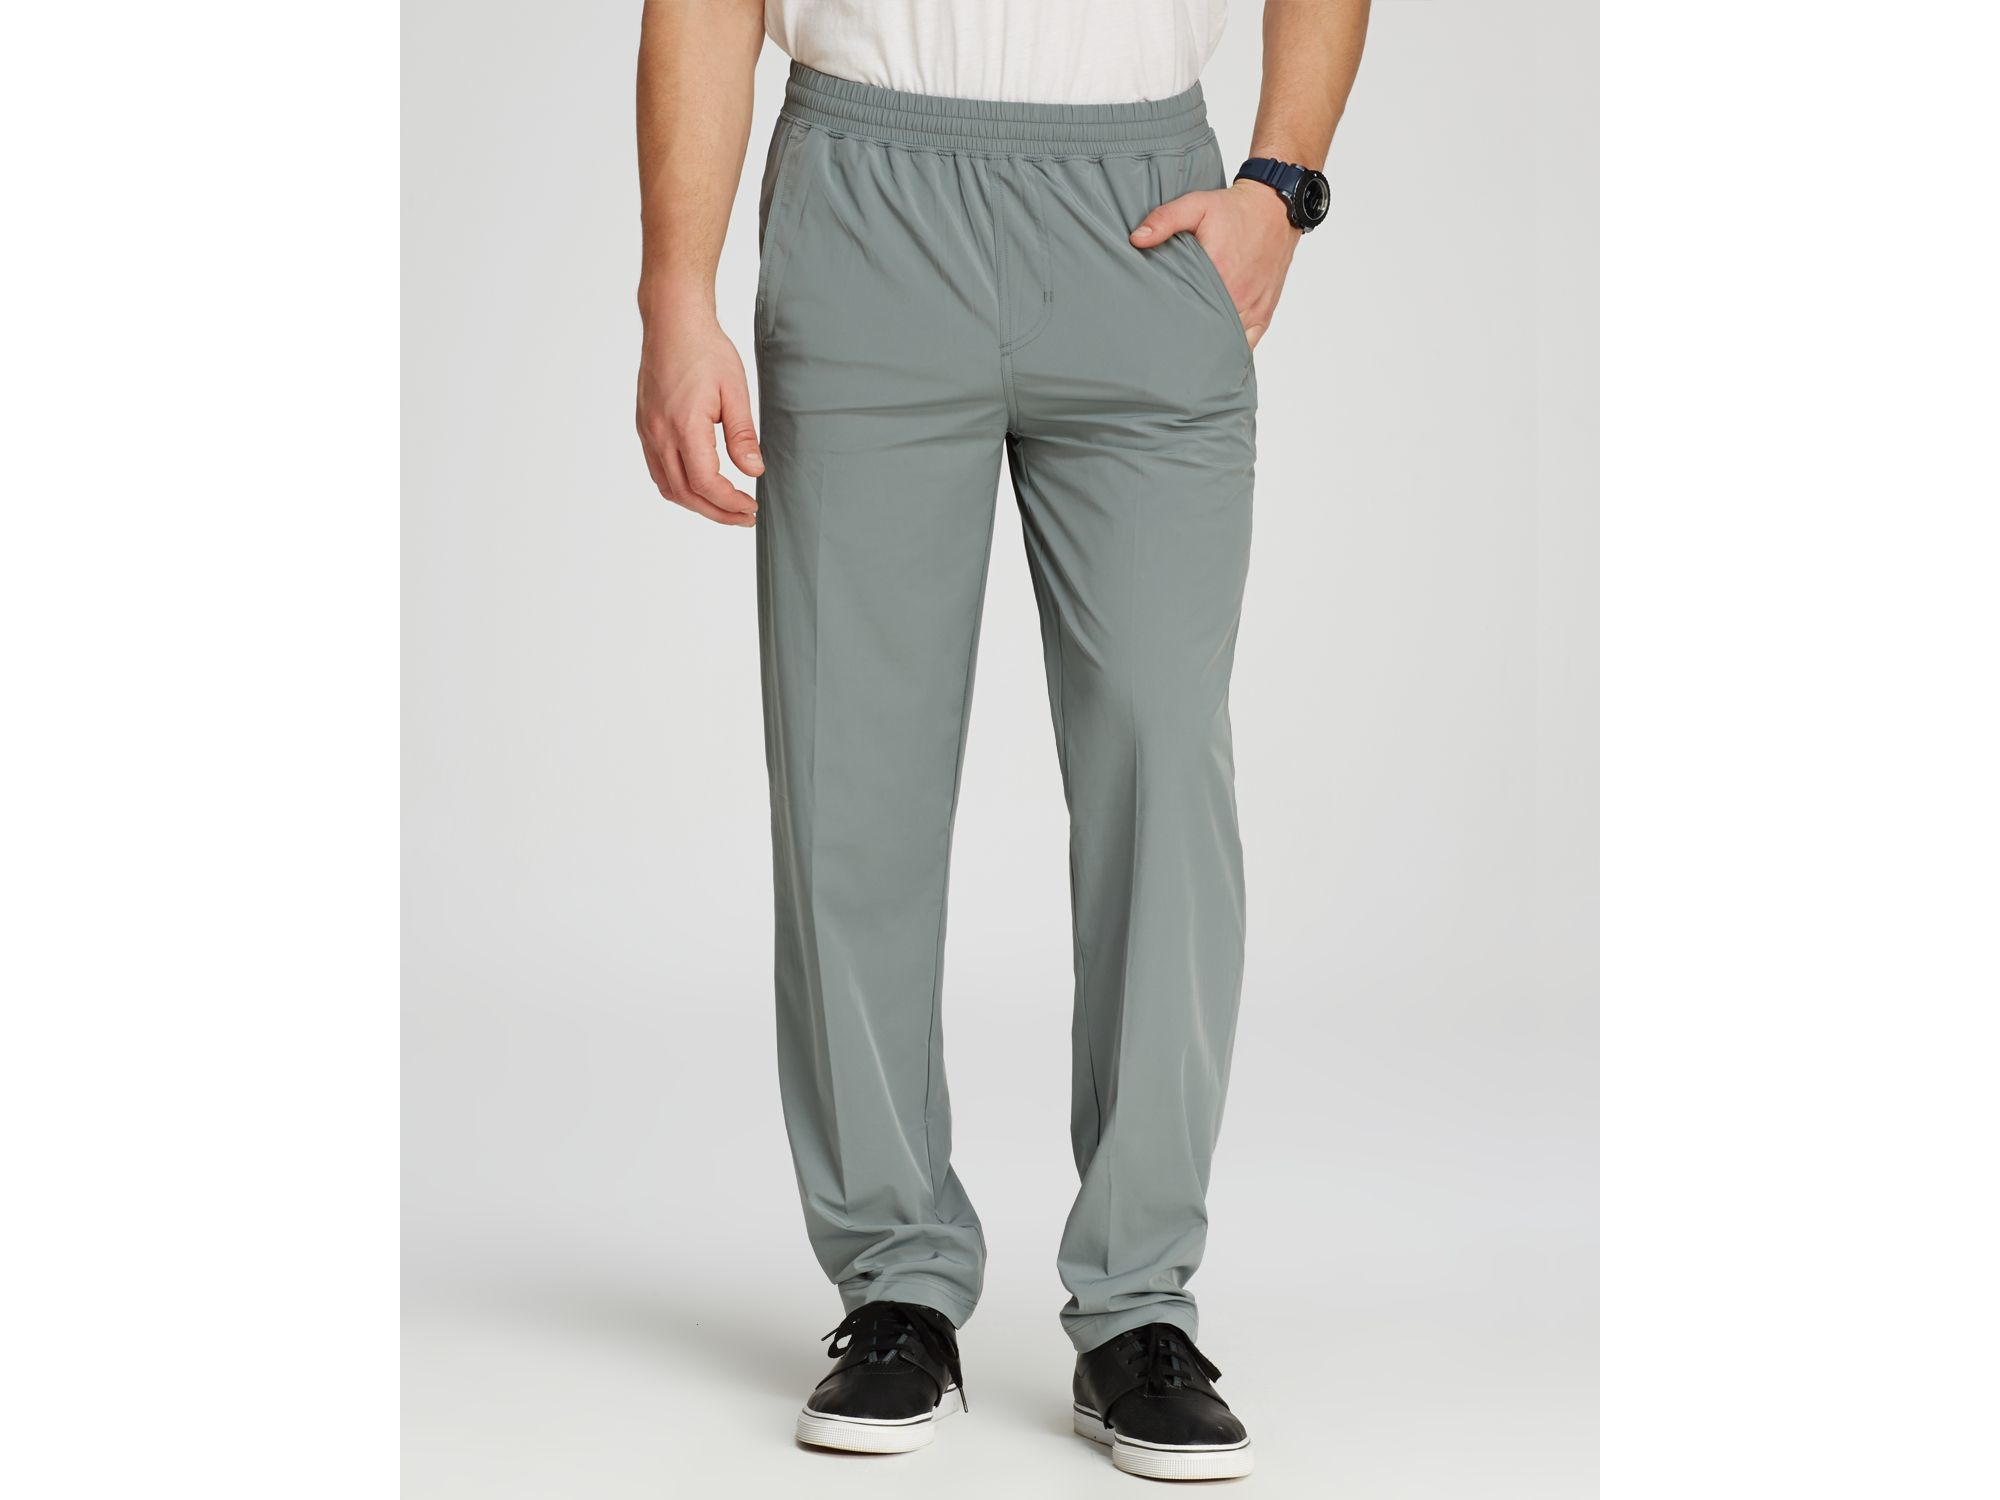 Lyst - Rhone Torrent Pants in Gray for Men